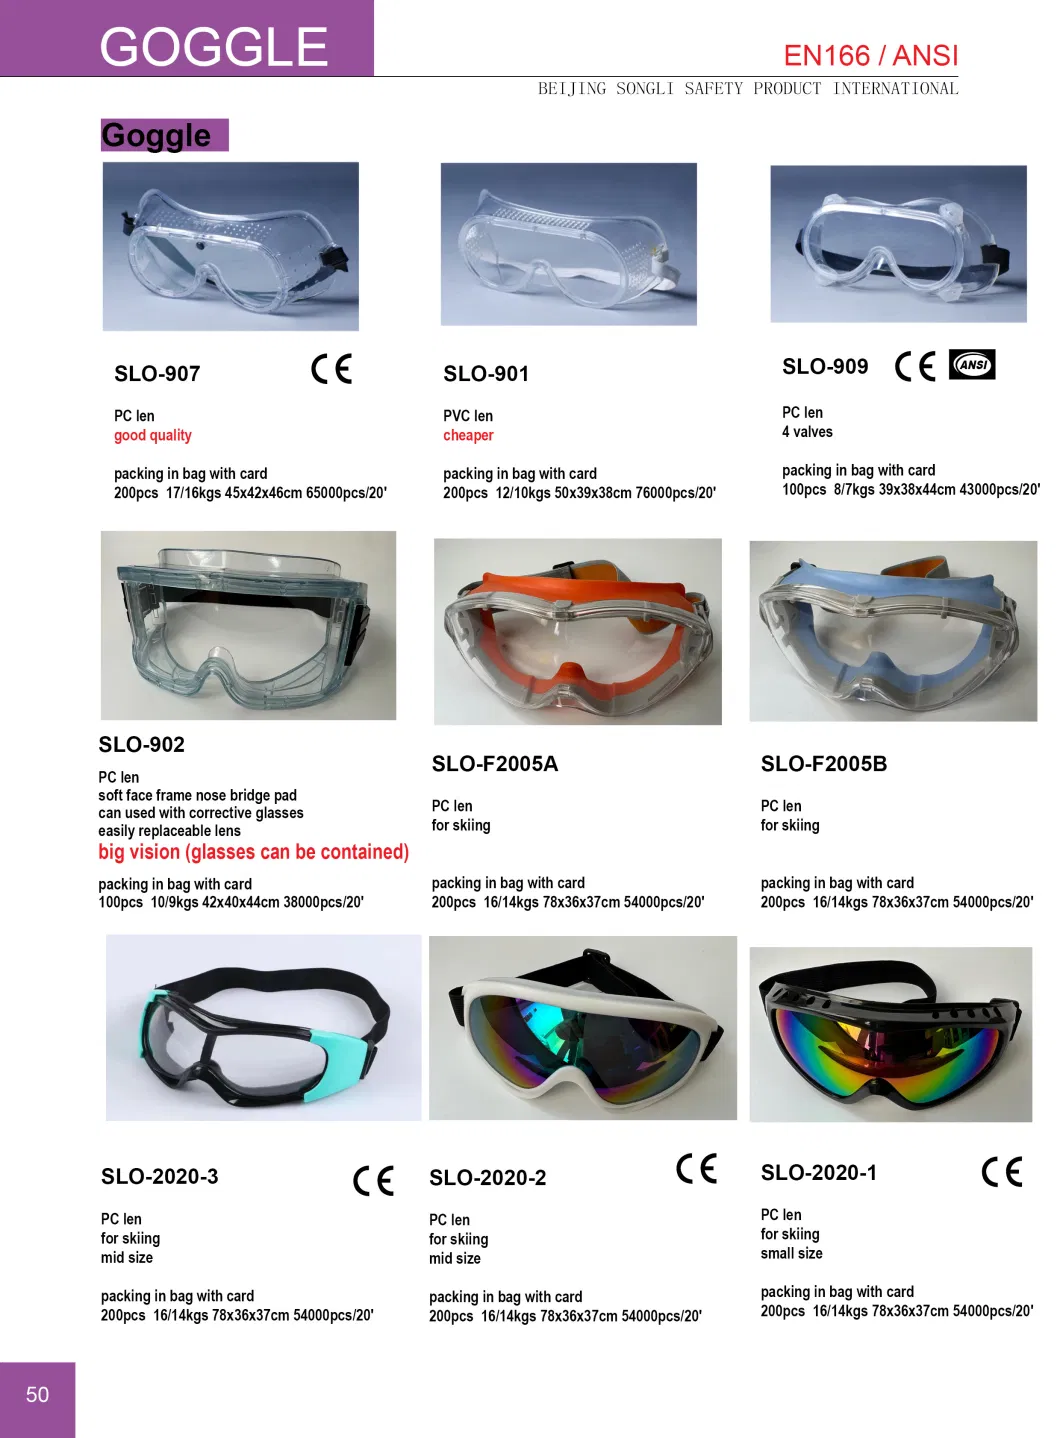 Slo-A8007 Auto Darken Welding Safety Protective Eye Wear Glasses Eye Protection